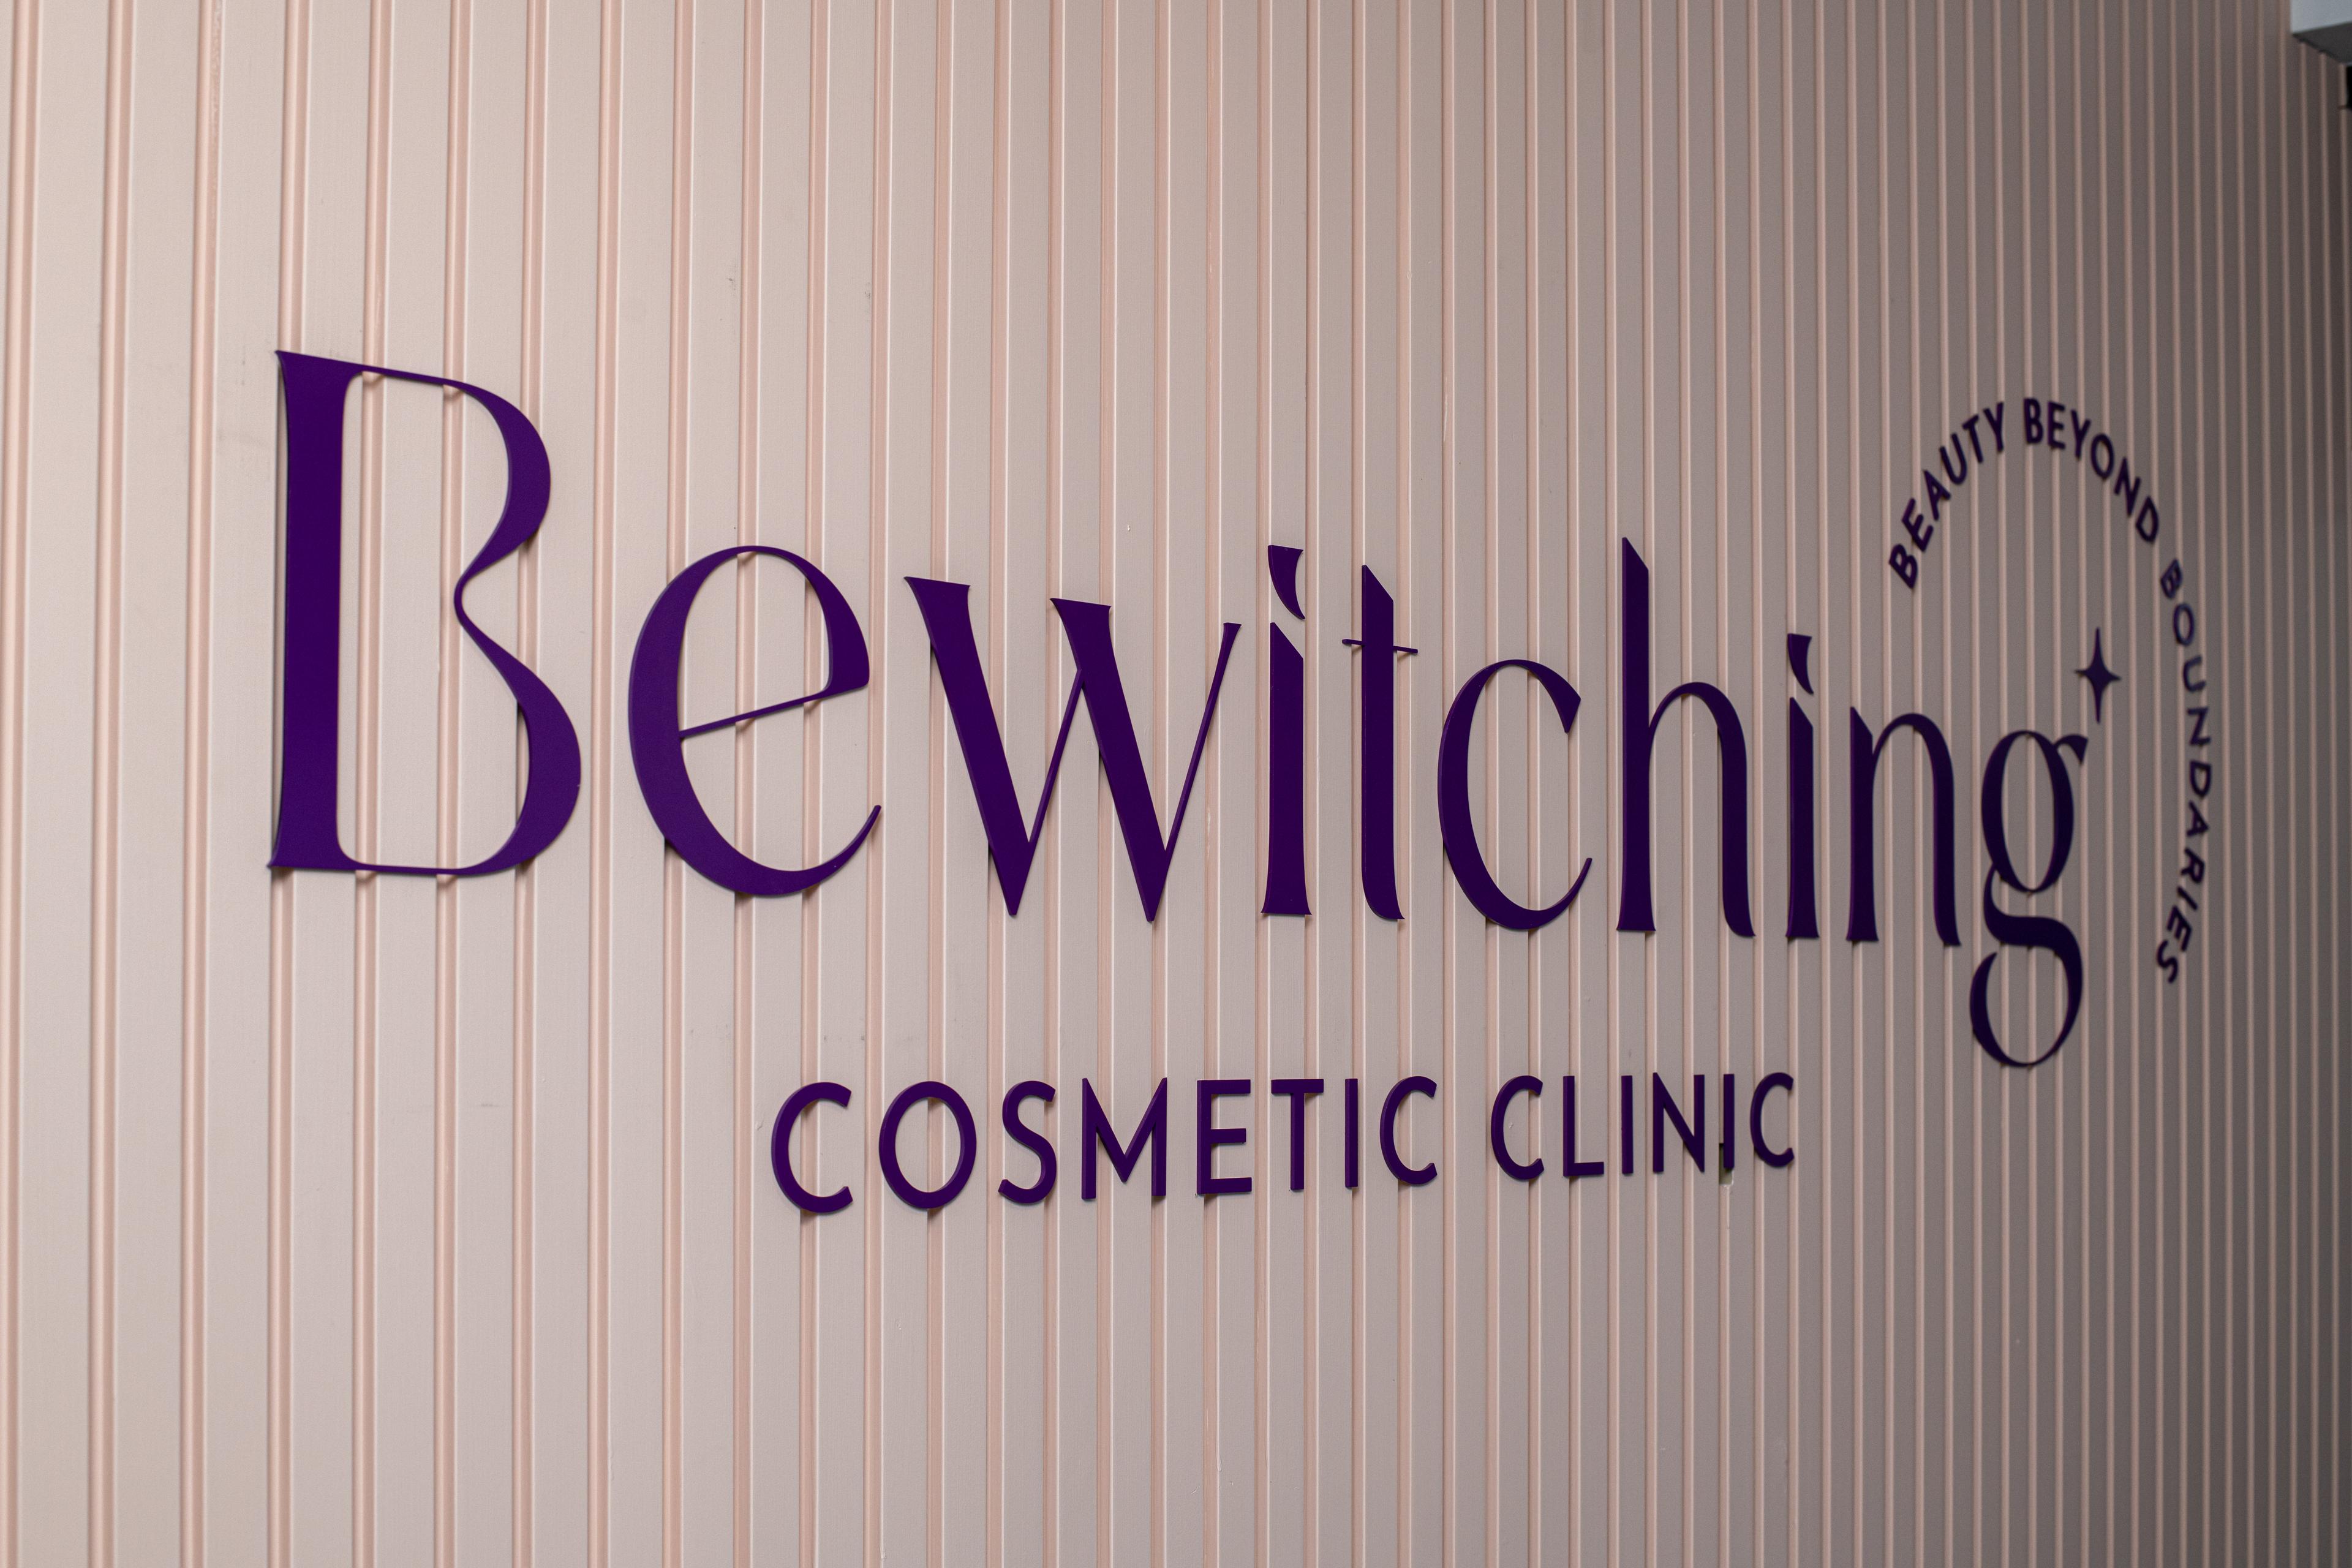 Bewitching logo signage on reception